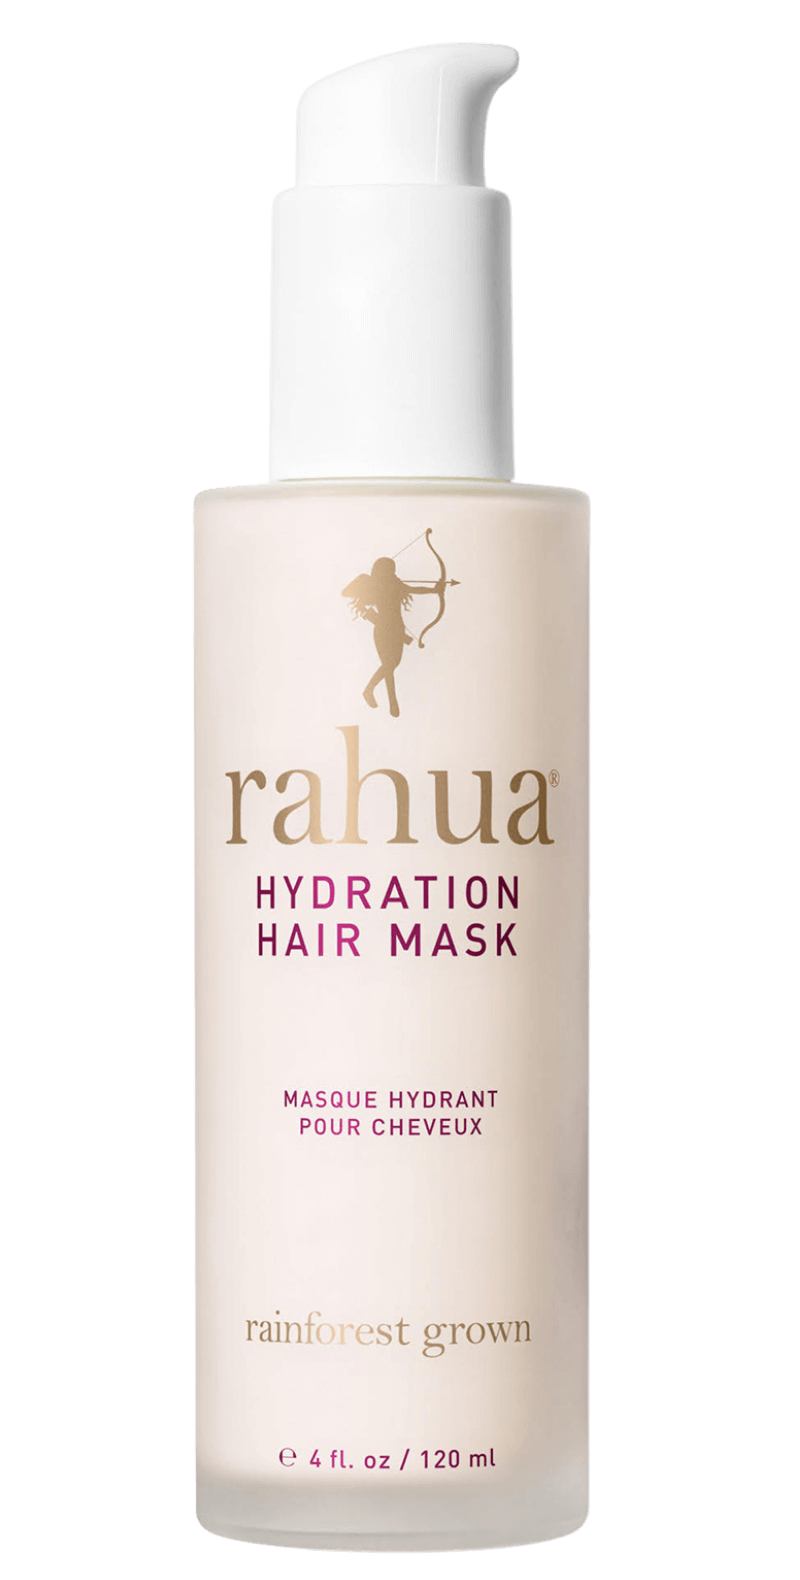 Rahua's Rahua Hydration Hair Mask from Bellini's Skin and Parfumerie 